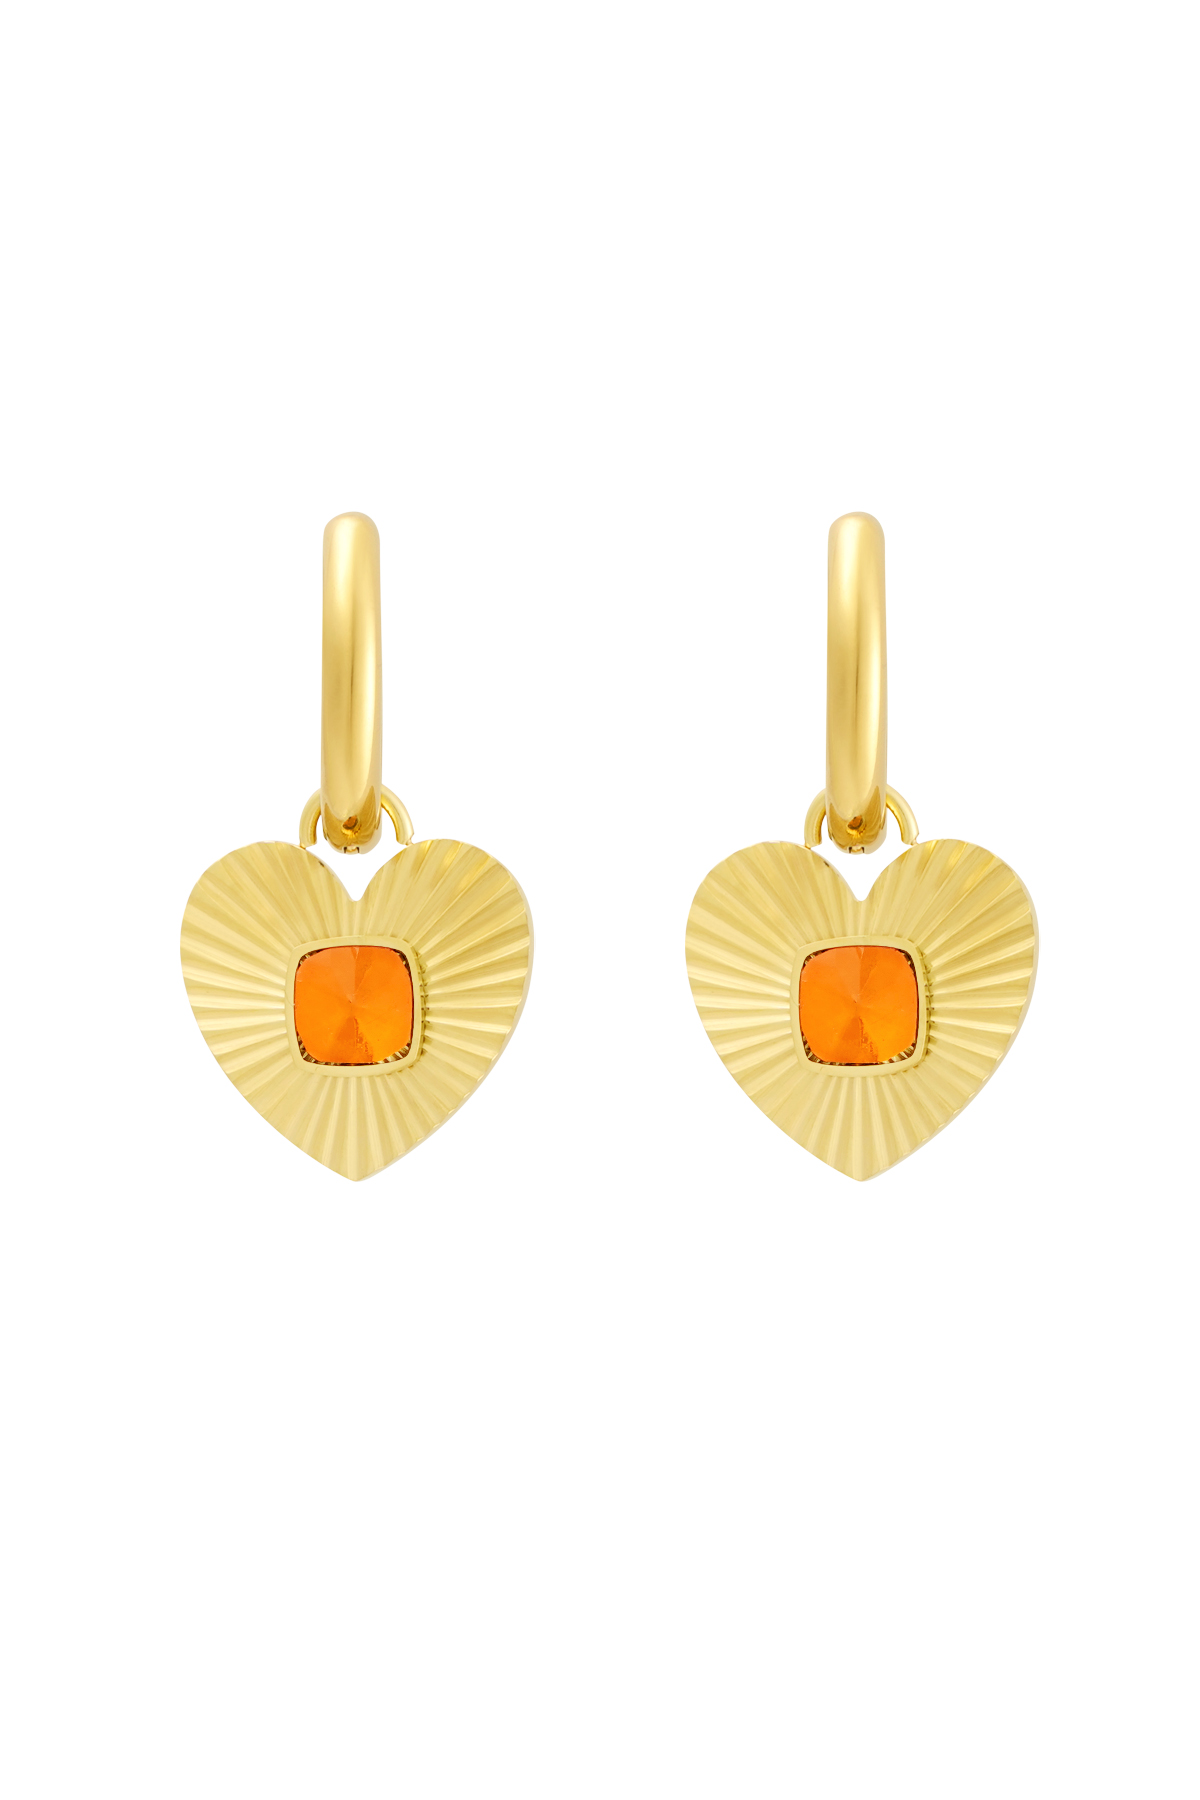 Earrings heart with stone - gold/orange 